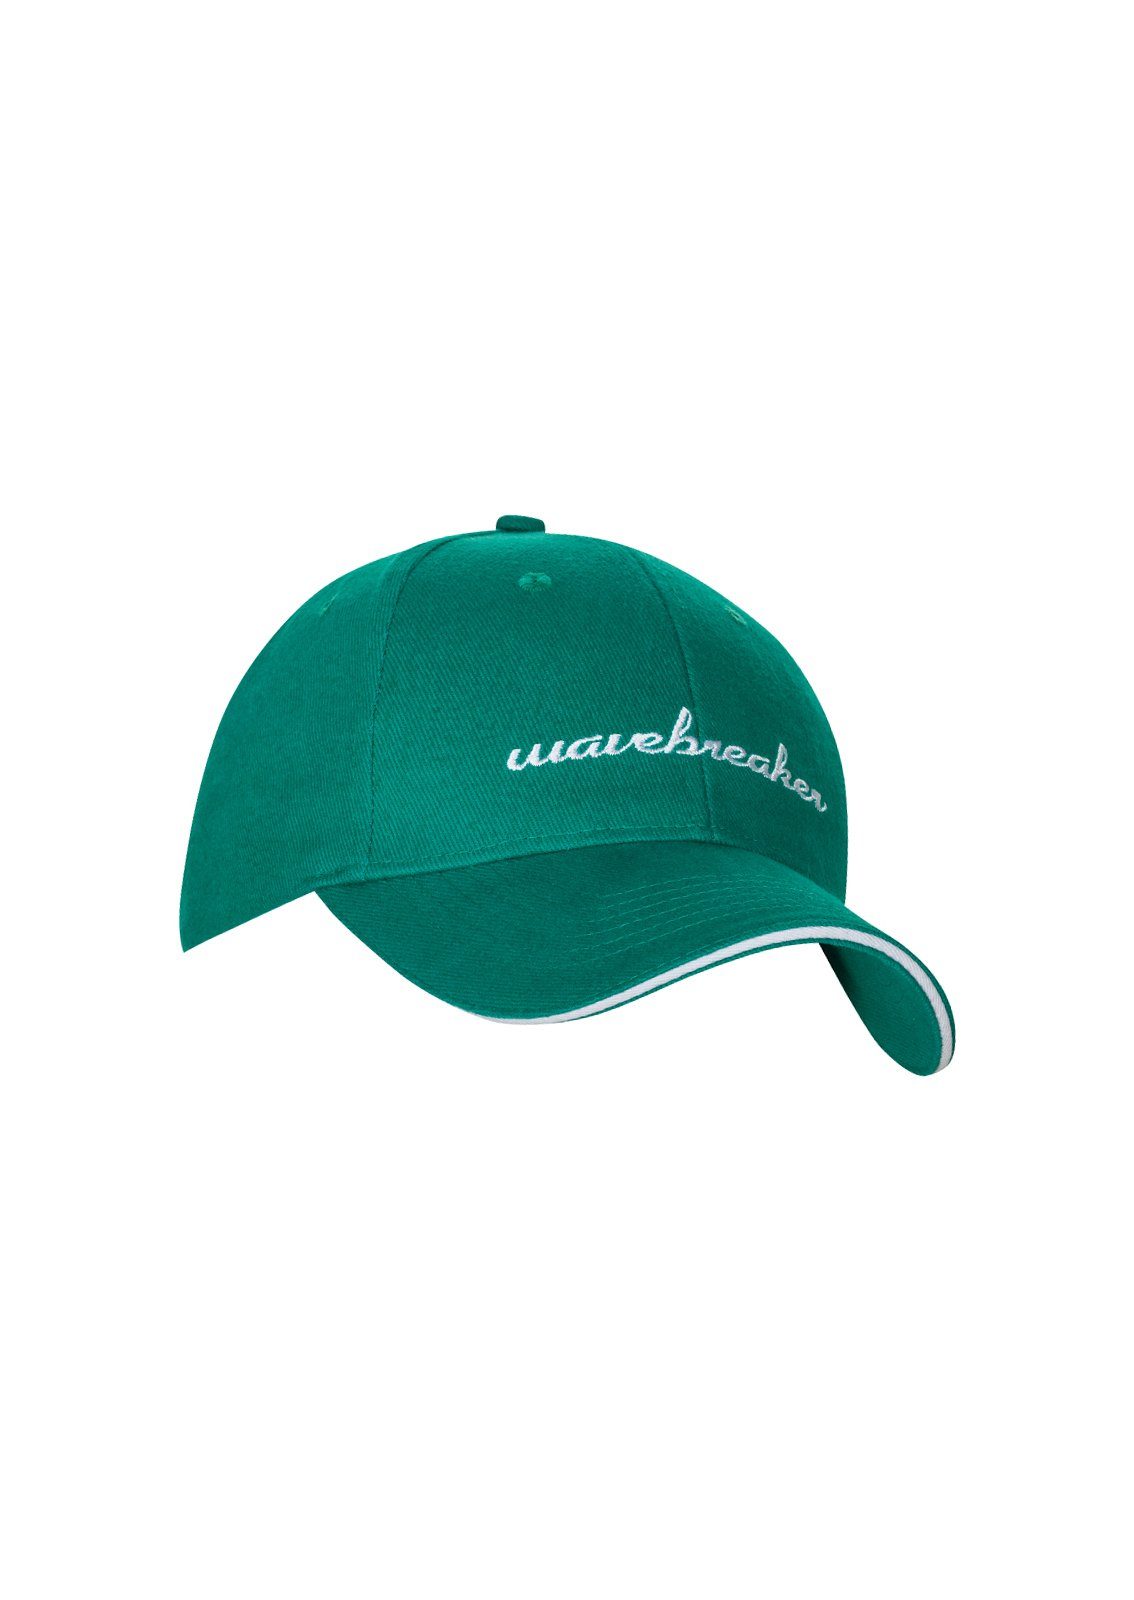 (1-St) grün wavebreaker Cap Baseball Cap